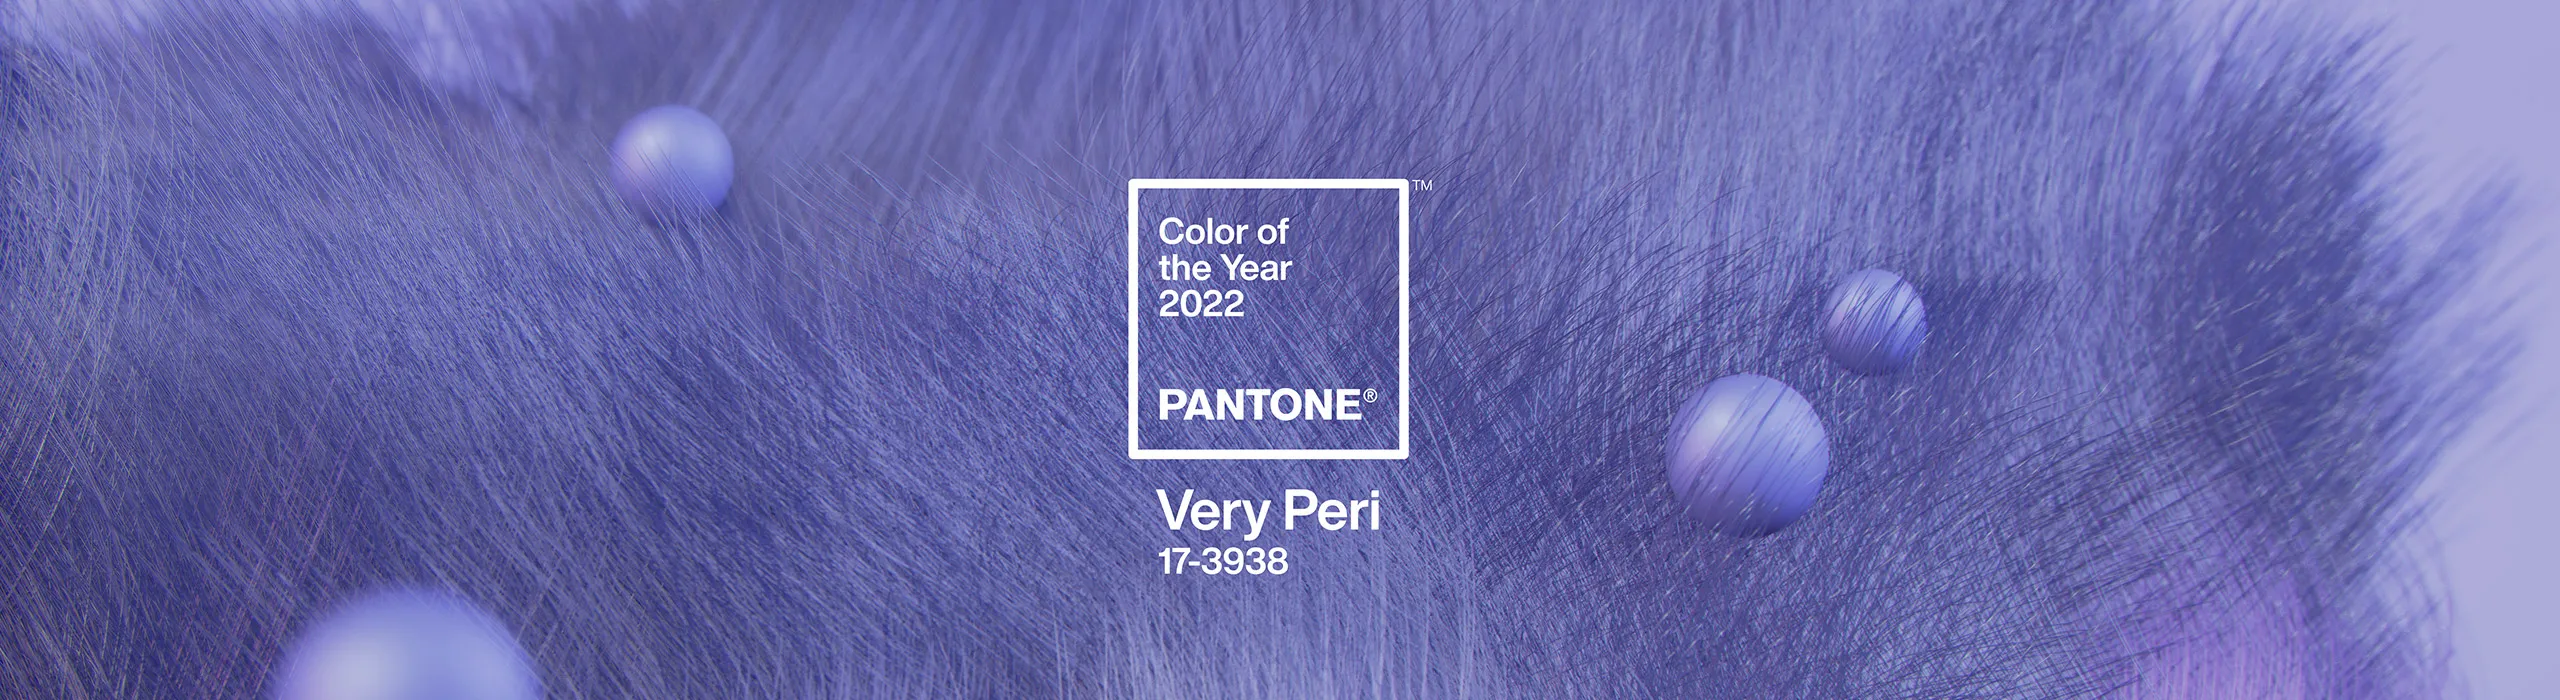 Farbpsychologie Pantone 2022 sehr peri